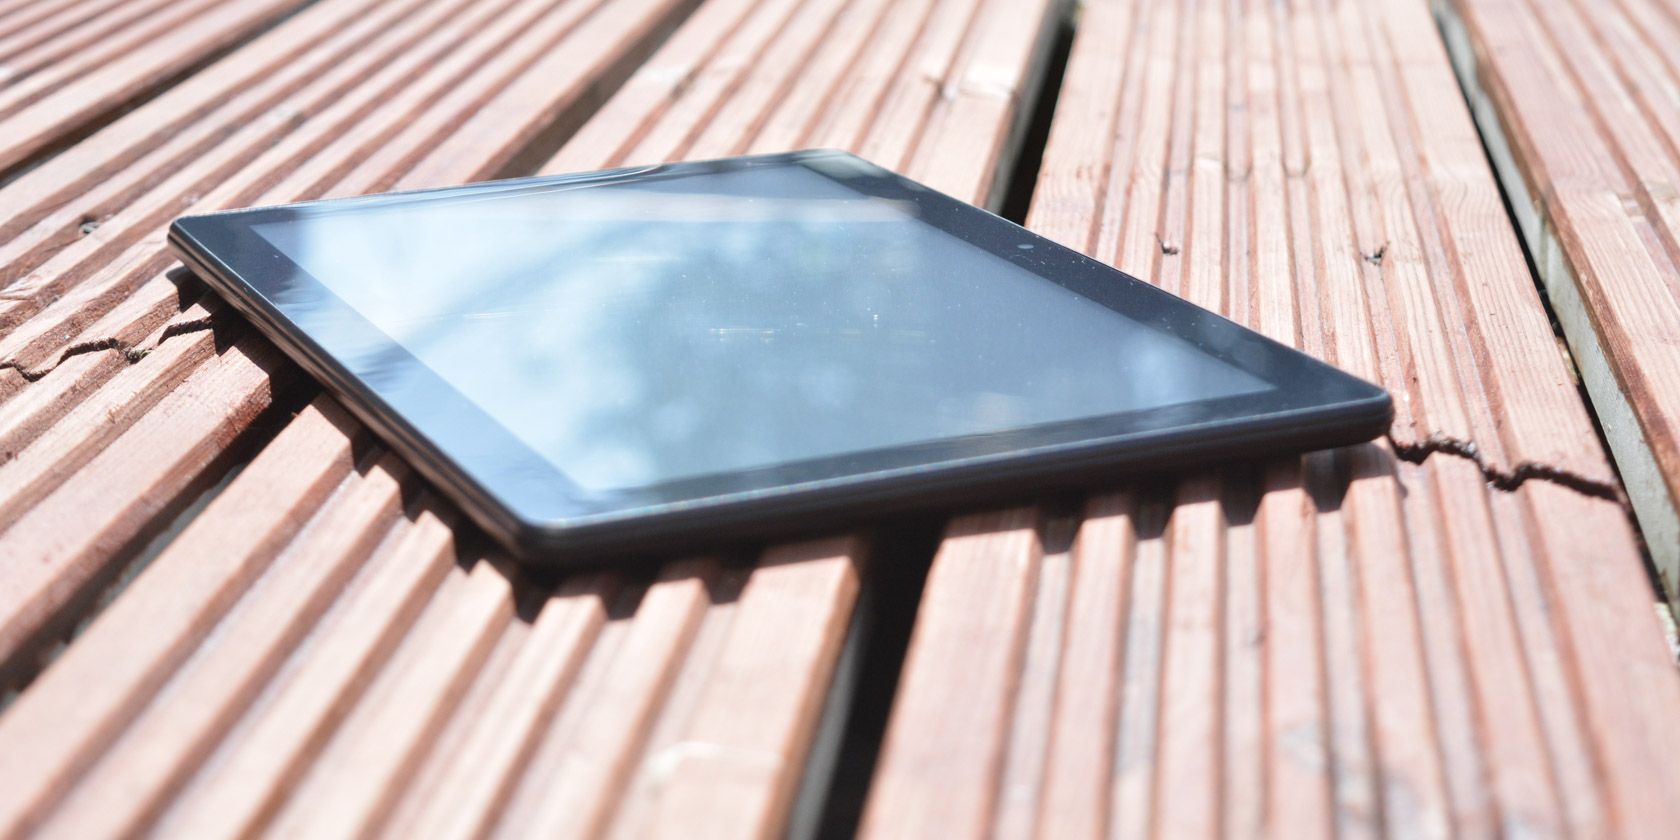 Vankyo MatrixPad Z4 tablet on decking